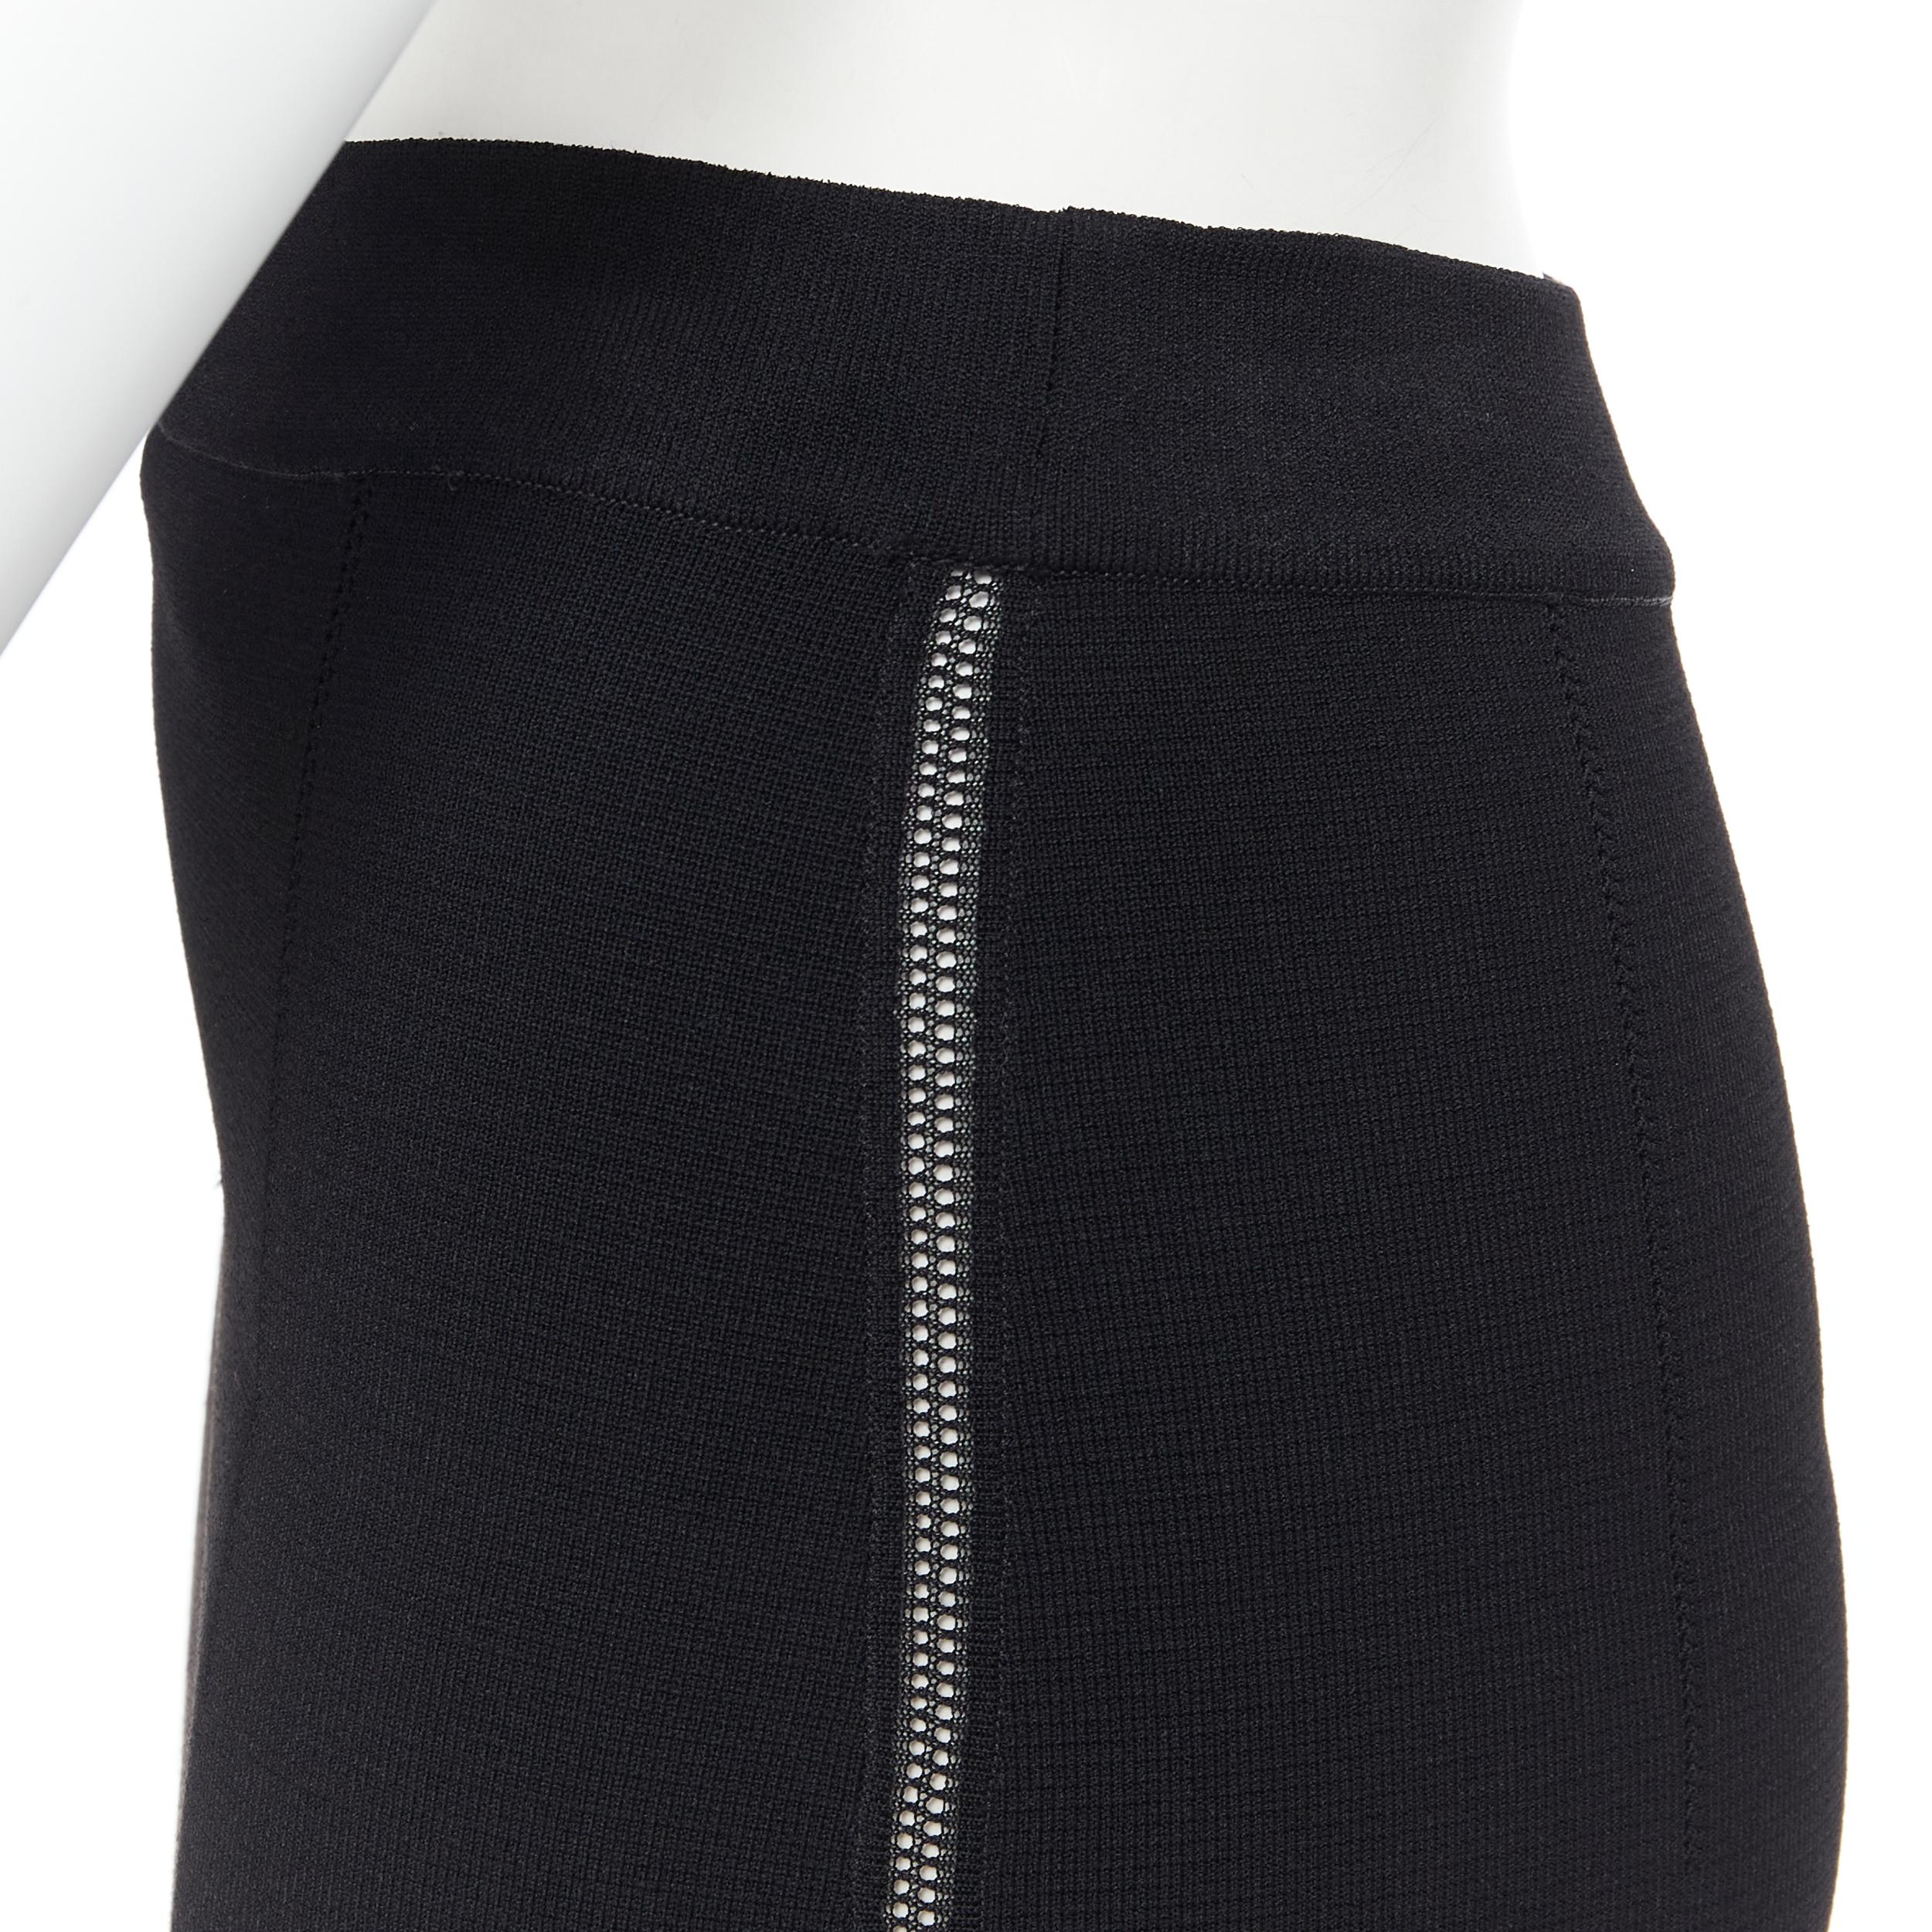 OSCAR DE LA RENTA 2016 black viscose knit knee length bodycon pencil skirt XS 
Reference: LNKO/A01761 
Brand: Oscar De La Renta 
Designer: Oscar De La Renta 
Collection: 2016 
Material: Viscose 
Color: Black 
Pattern: Solid 
Extra Detail: Stretch